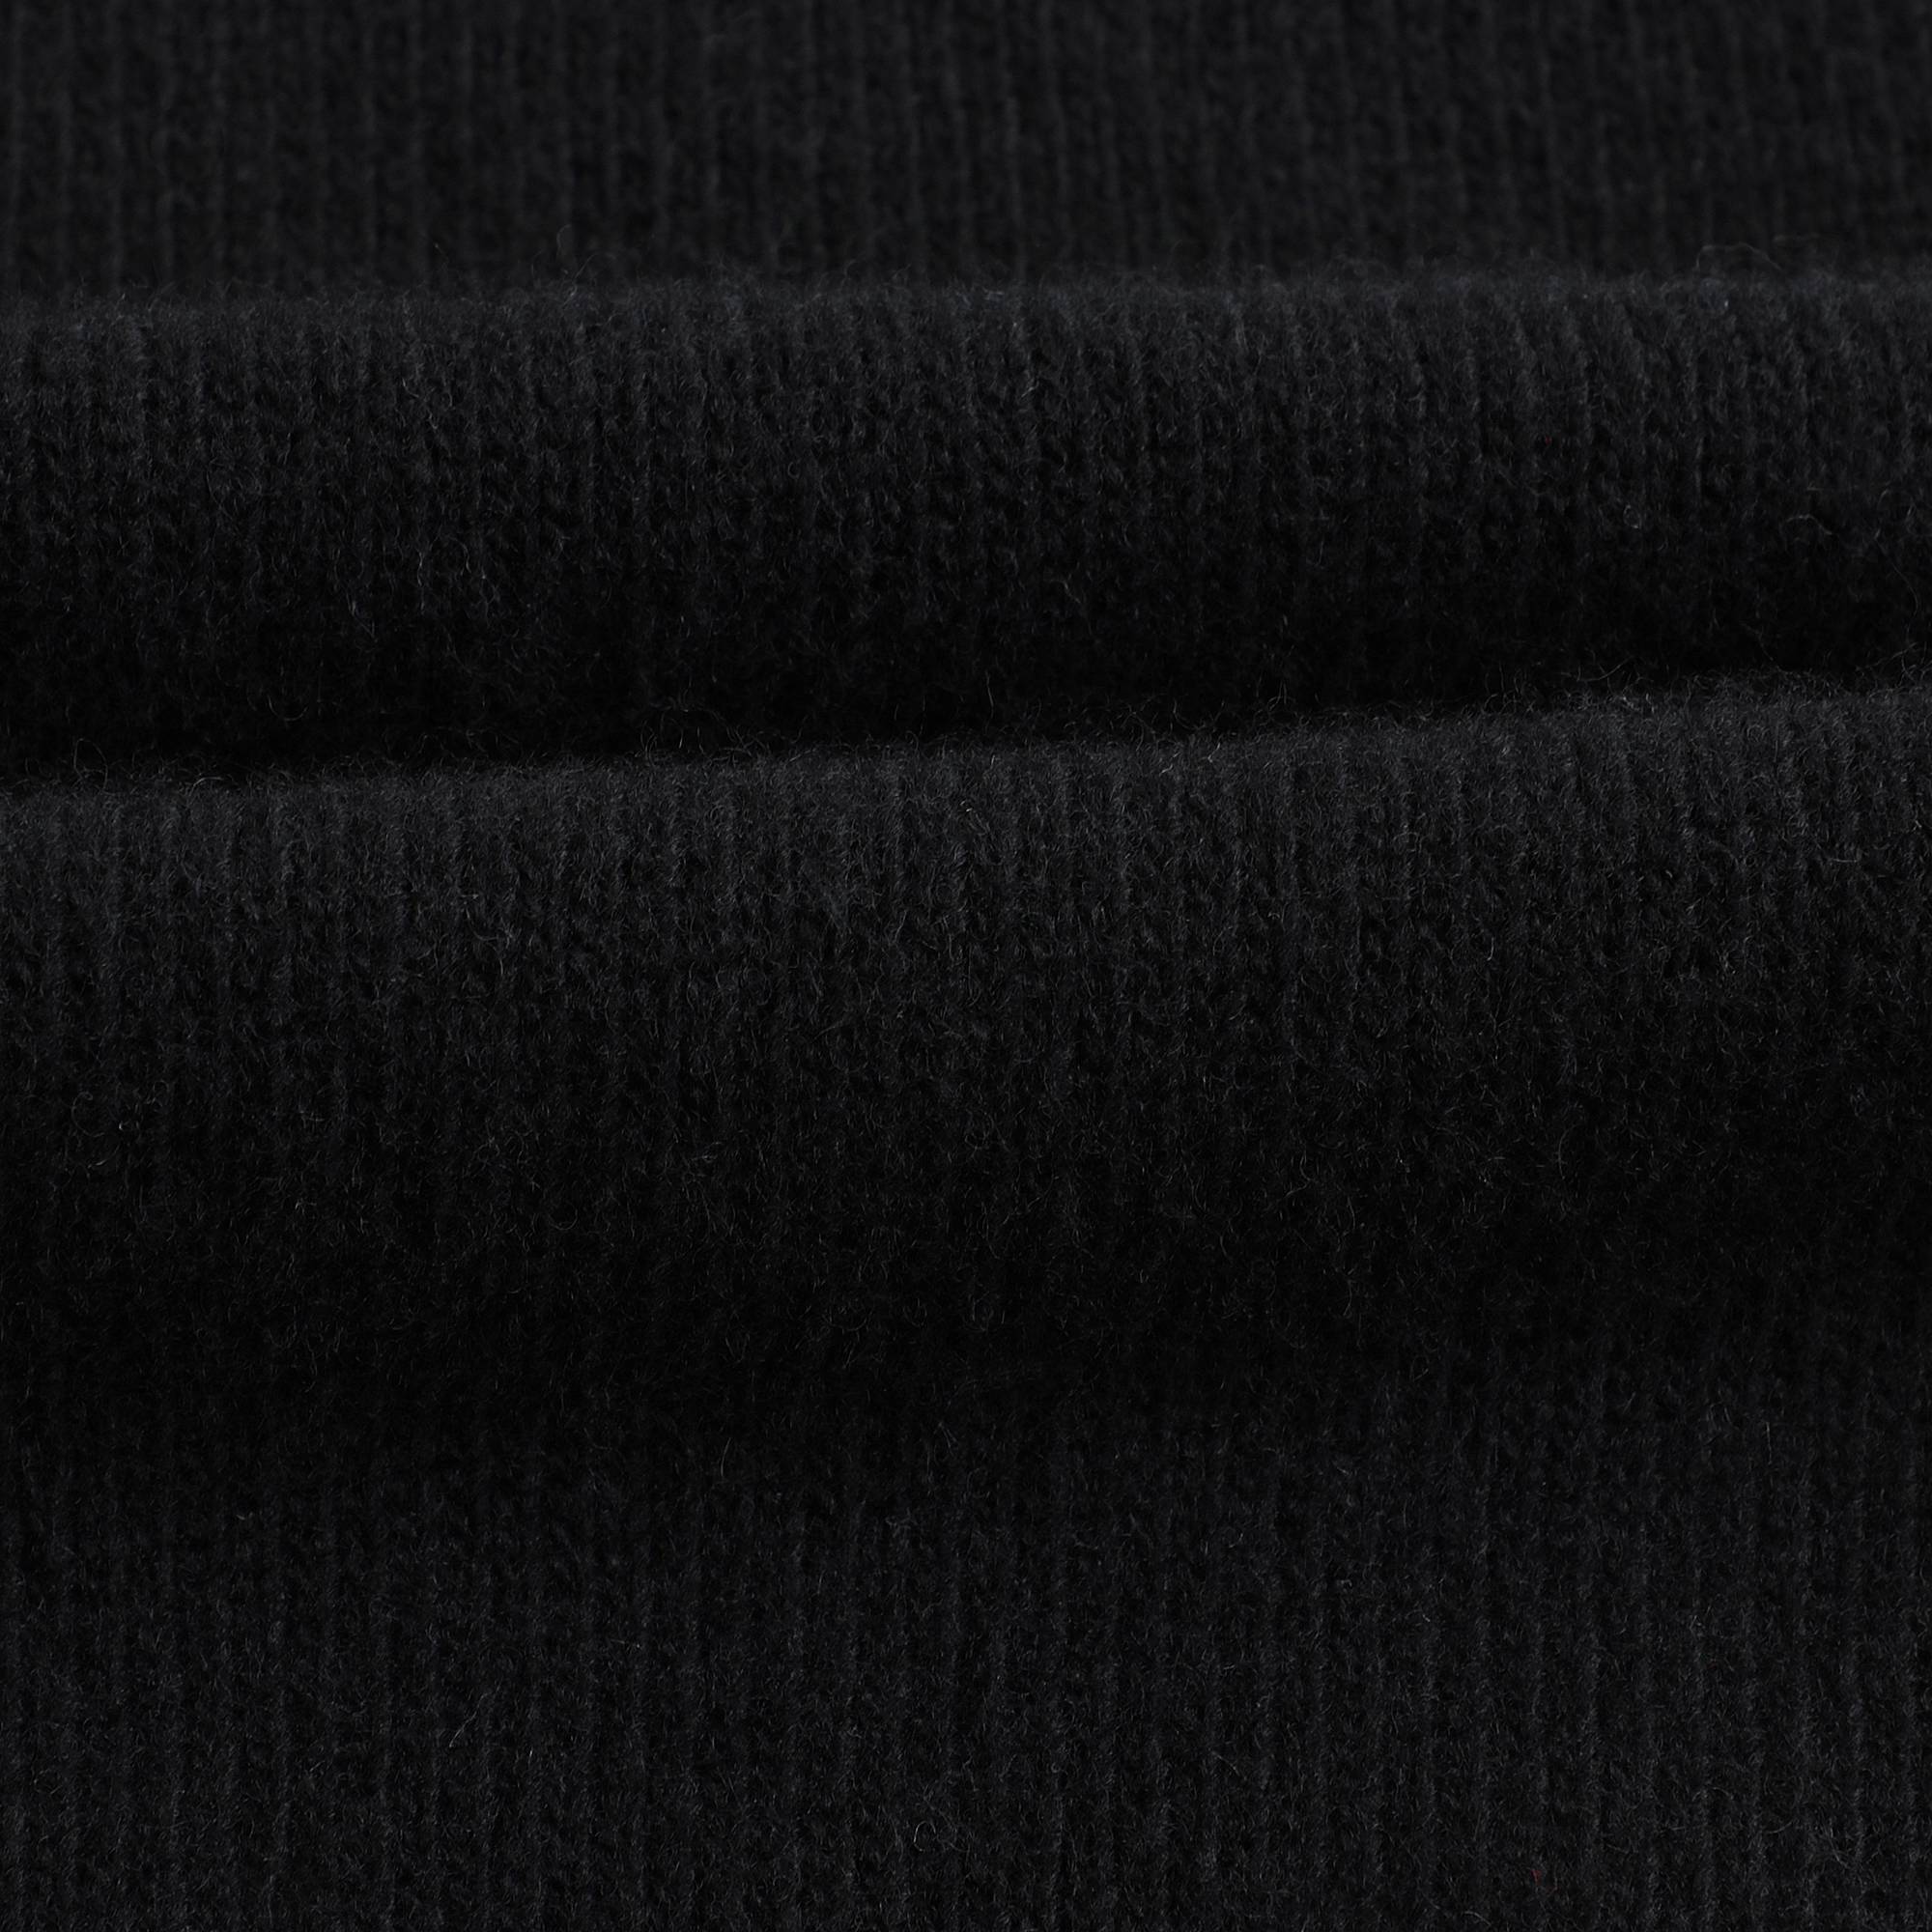 Boys Black & Grey Jacquard Wool Sweater